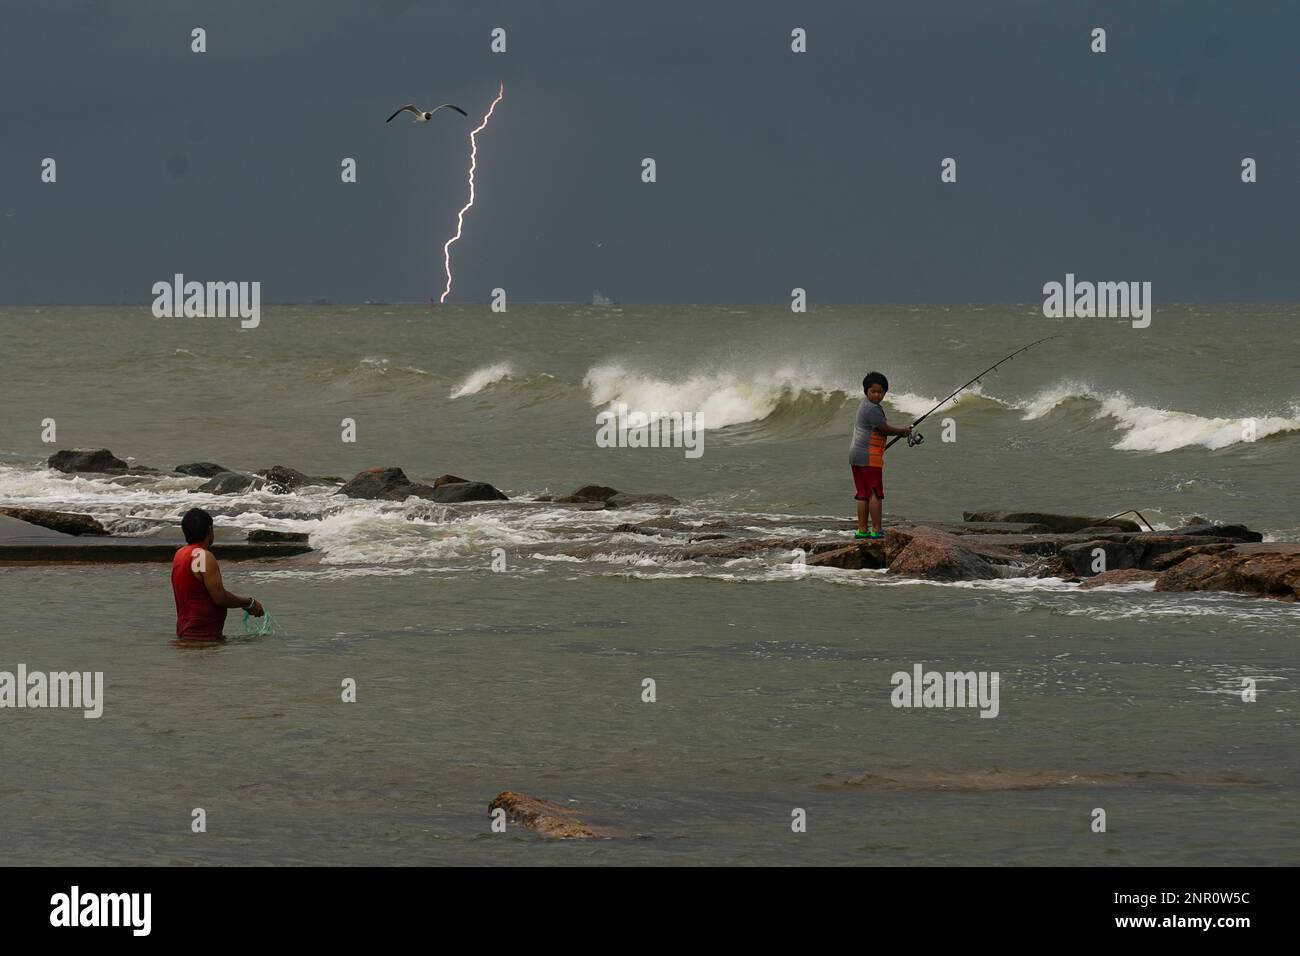 https://c8.alamy.com/comp/2NR0W5C/lightning-strikes-in-the-distance-as-people-fish-near-east-beach-friday-may-15-2020-in-galveston-texas-mark-mulliganhouston-chronicle-via-ap-2NR0W5C.jpg